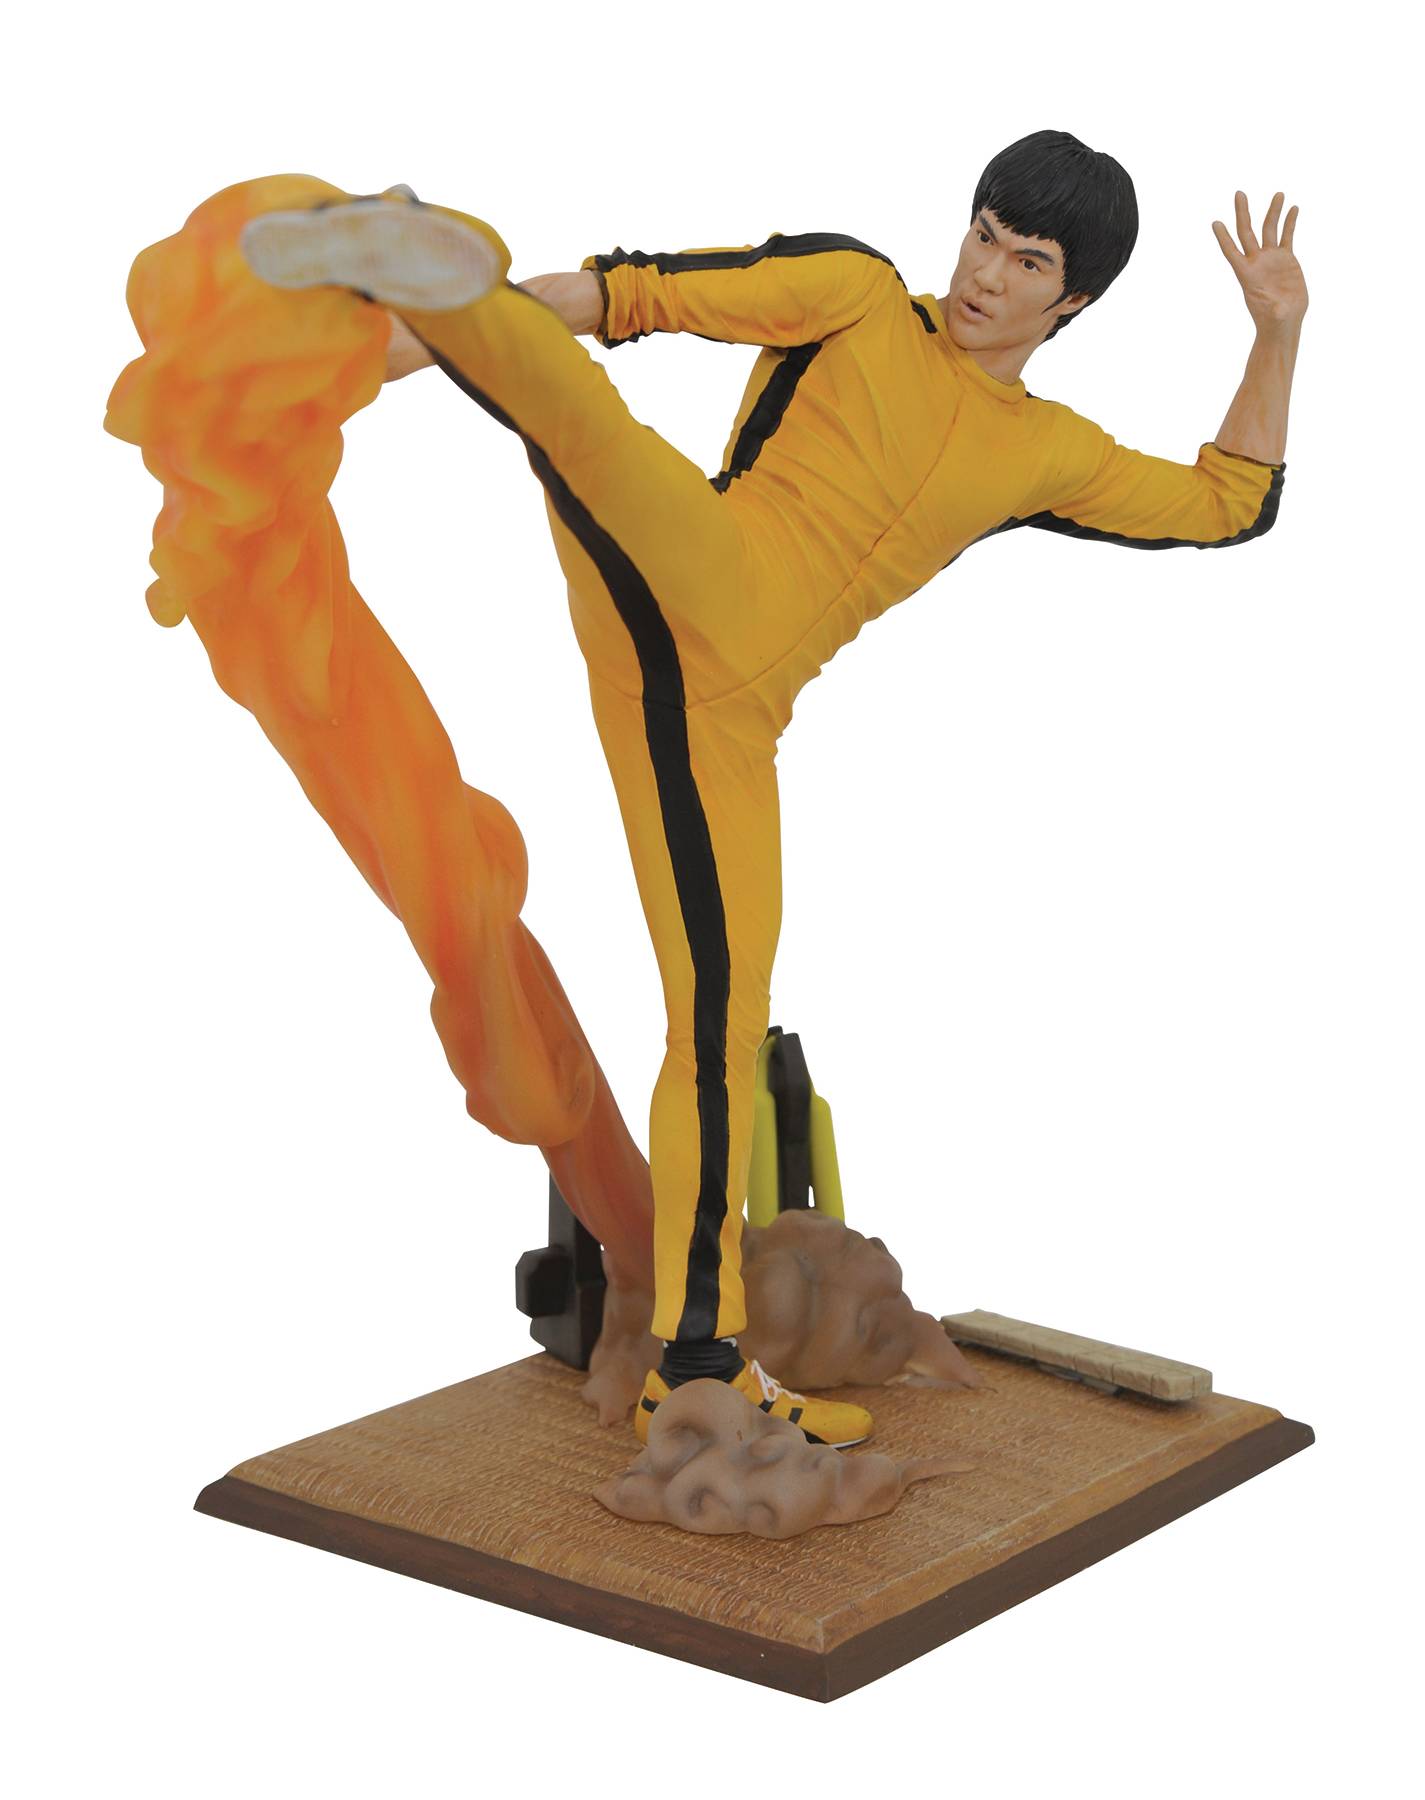 Bruce Lee Gallery Kicking PVC Figure